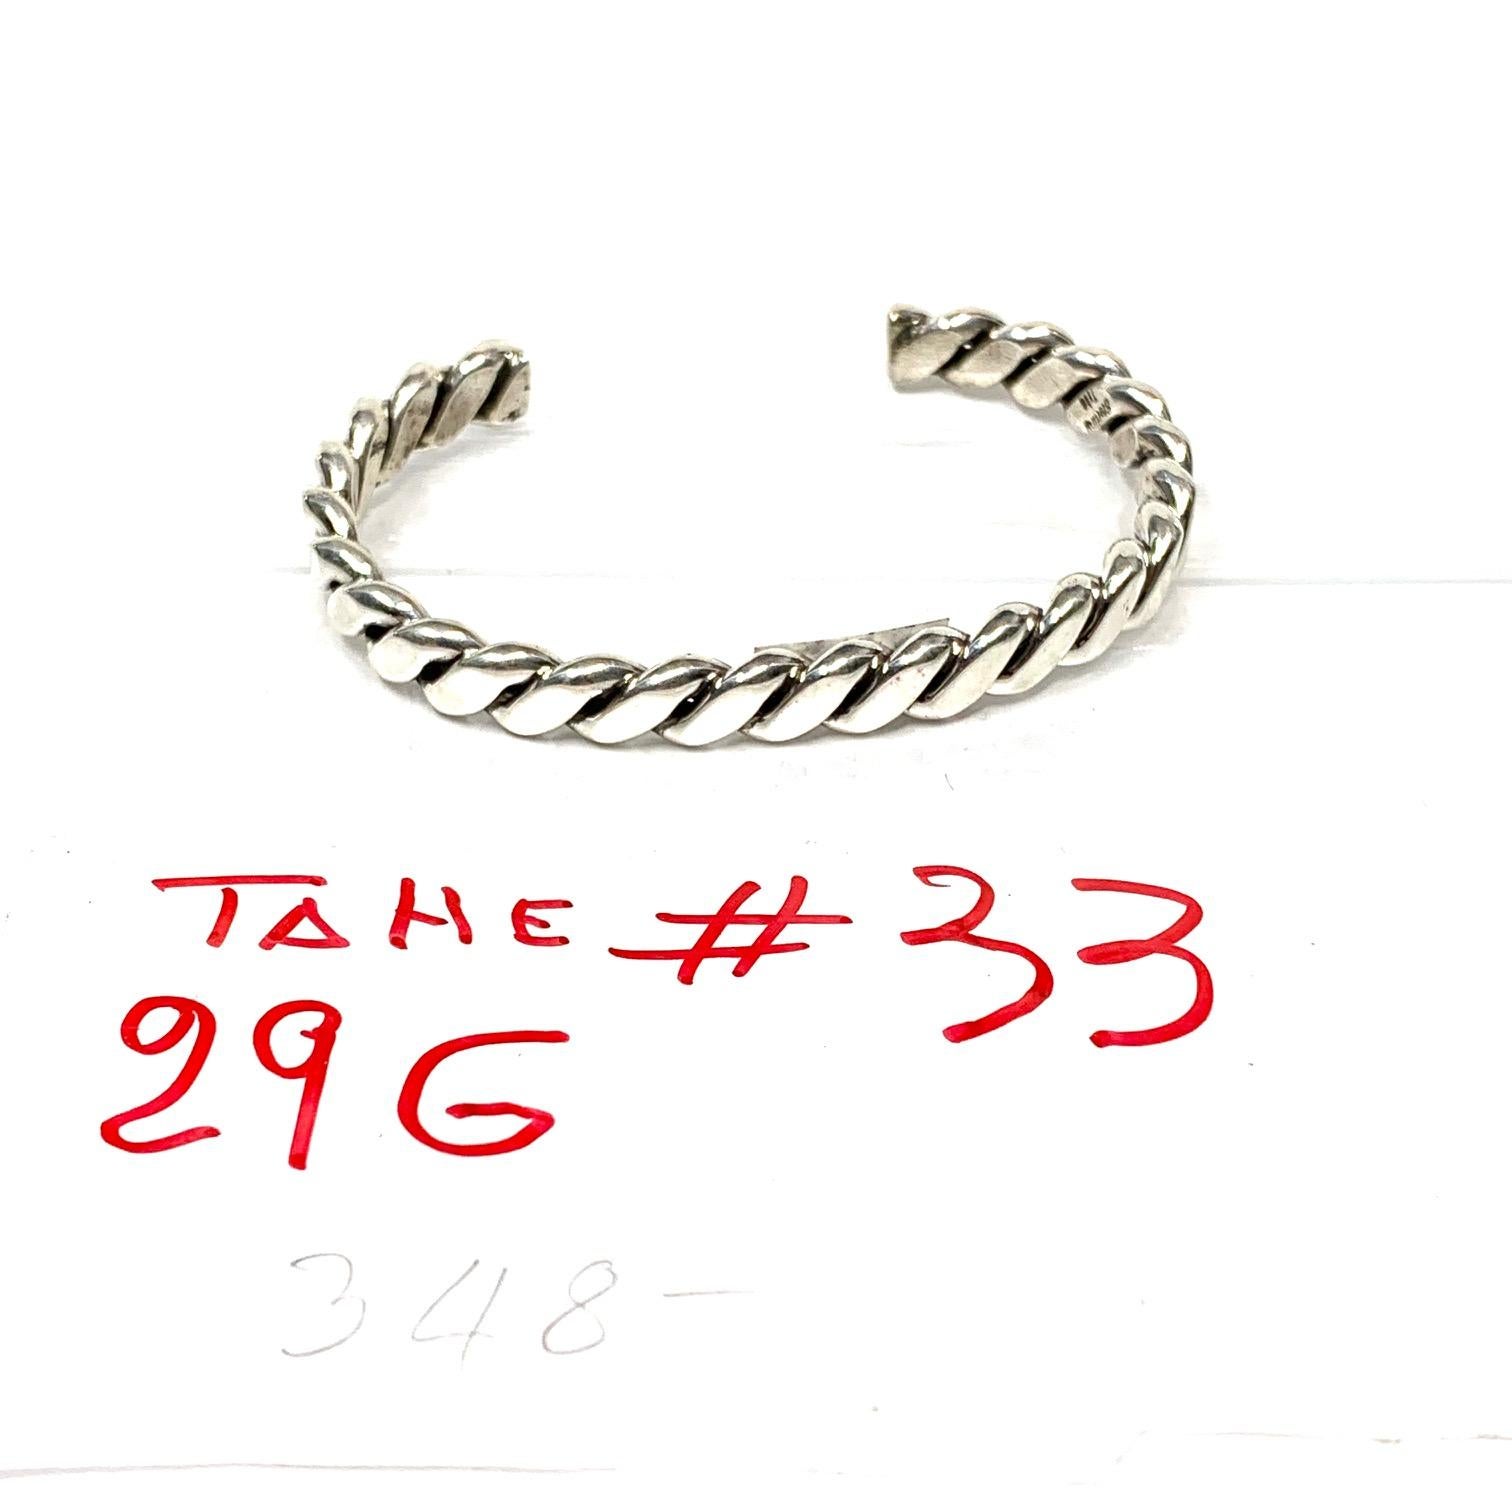 Navajo Sterling Silver 29 Gr. Cuff Bracelet By TAHE PS33 2